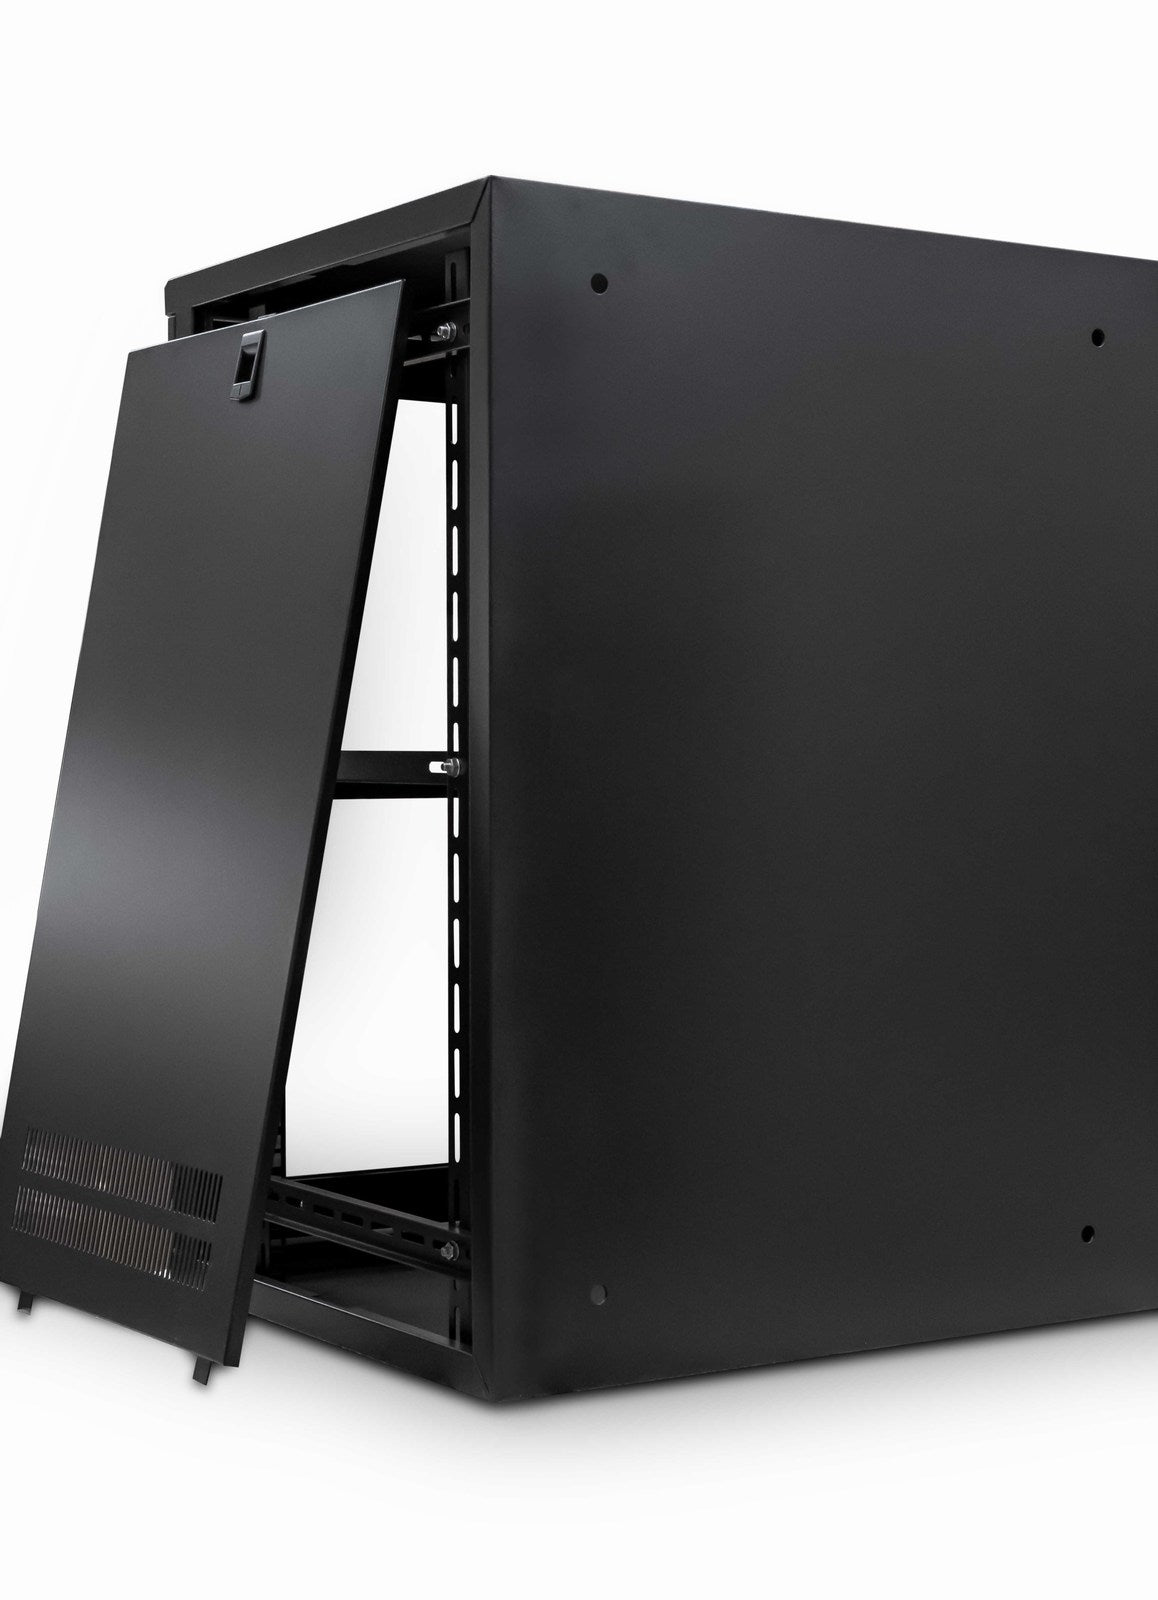 12U 550mm 19" Data Wall Cabinet w/ Shelf & Lockable Sides - Black